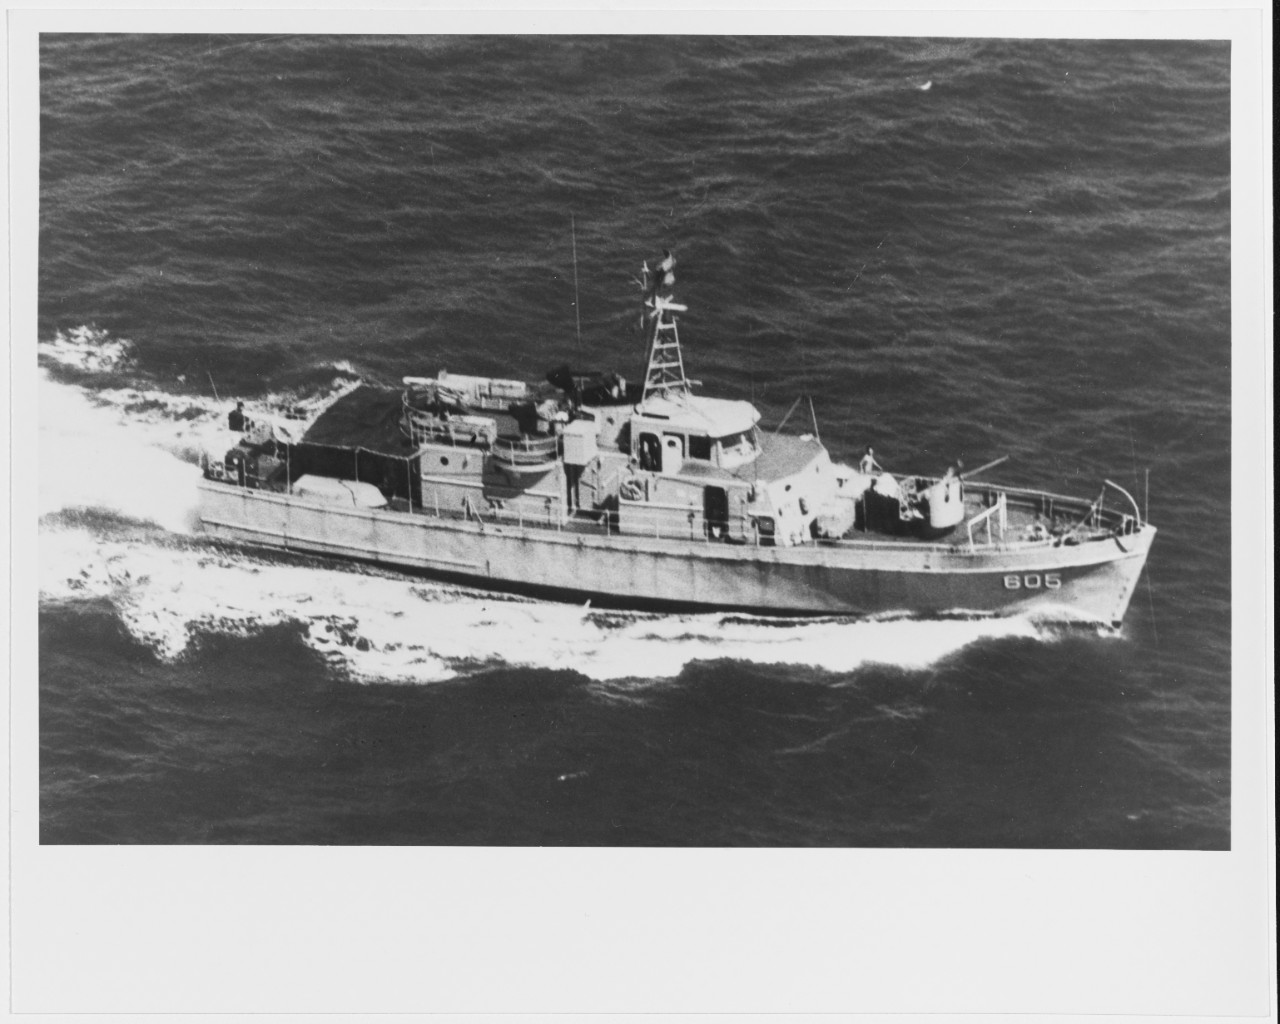 KIM QUY (HQ-605) (South Vietnamese patrol vessel, ex-USN PGM-59)